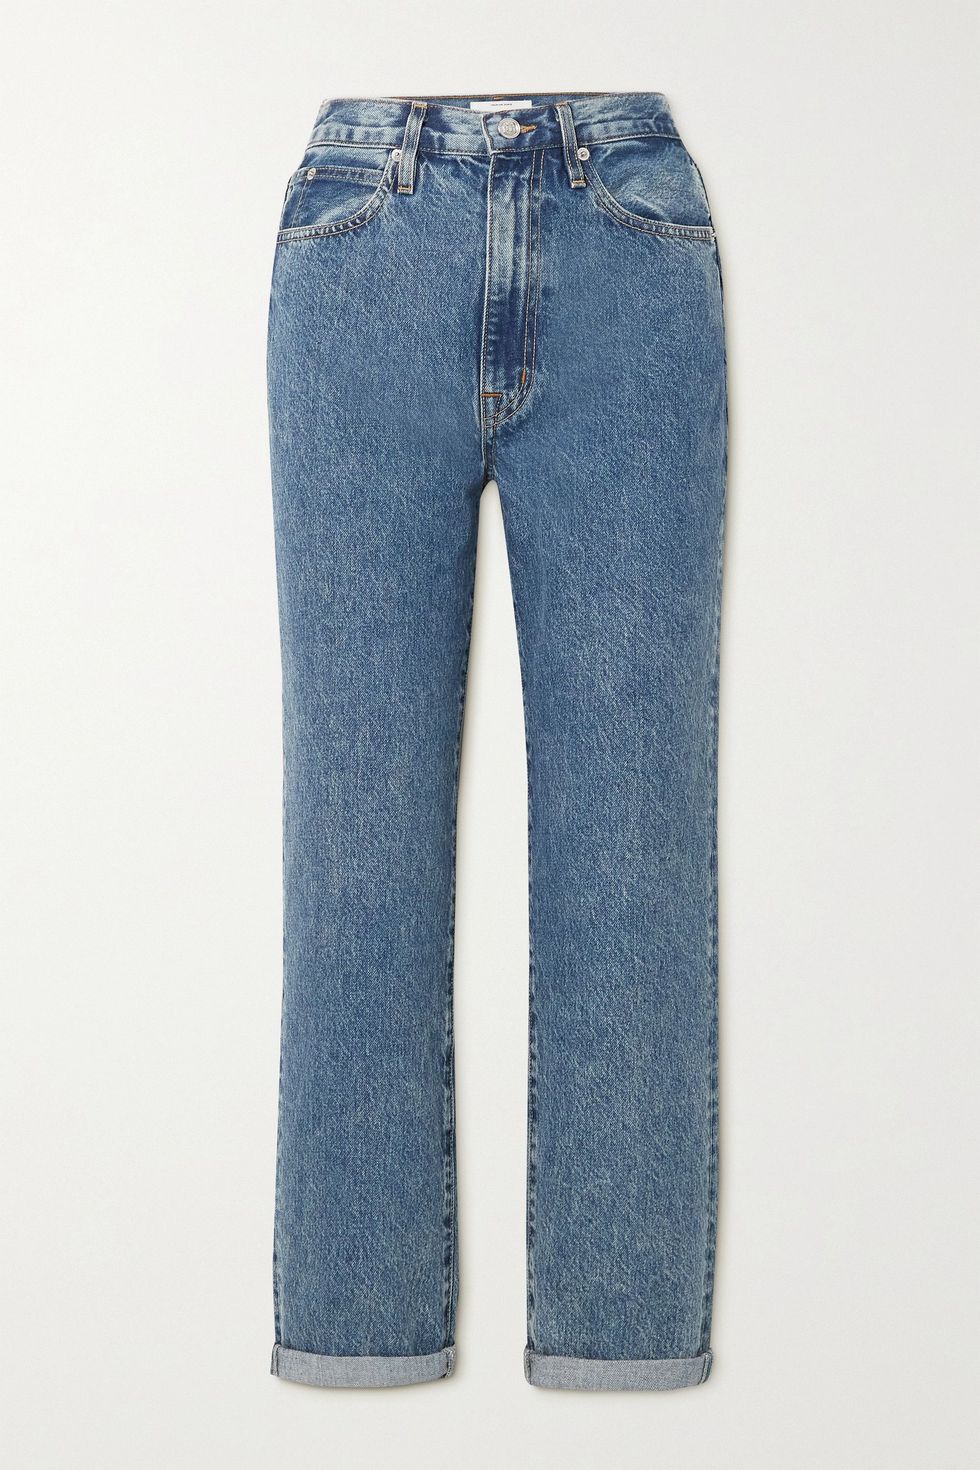 12 Best High Waist Jeans for Stylish Women 2023